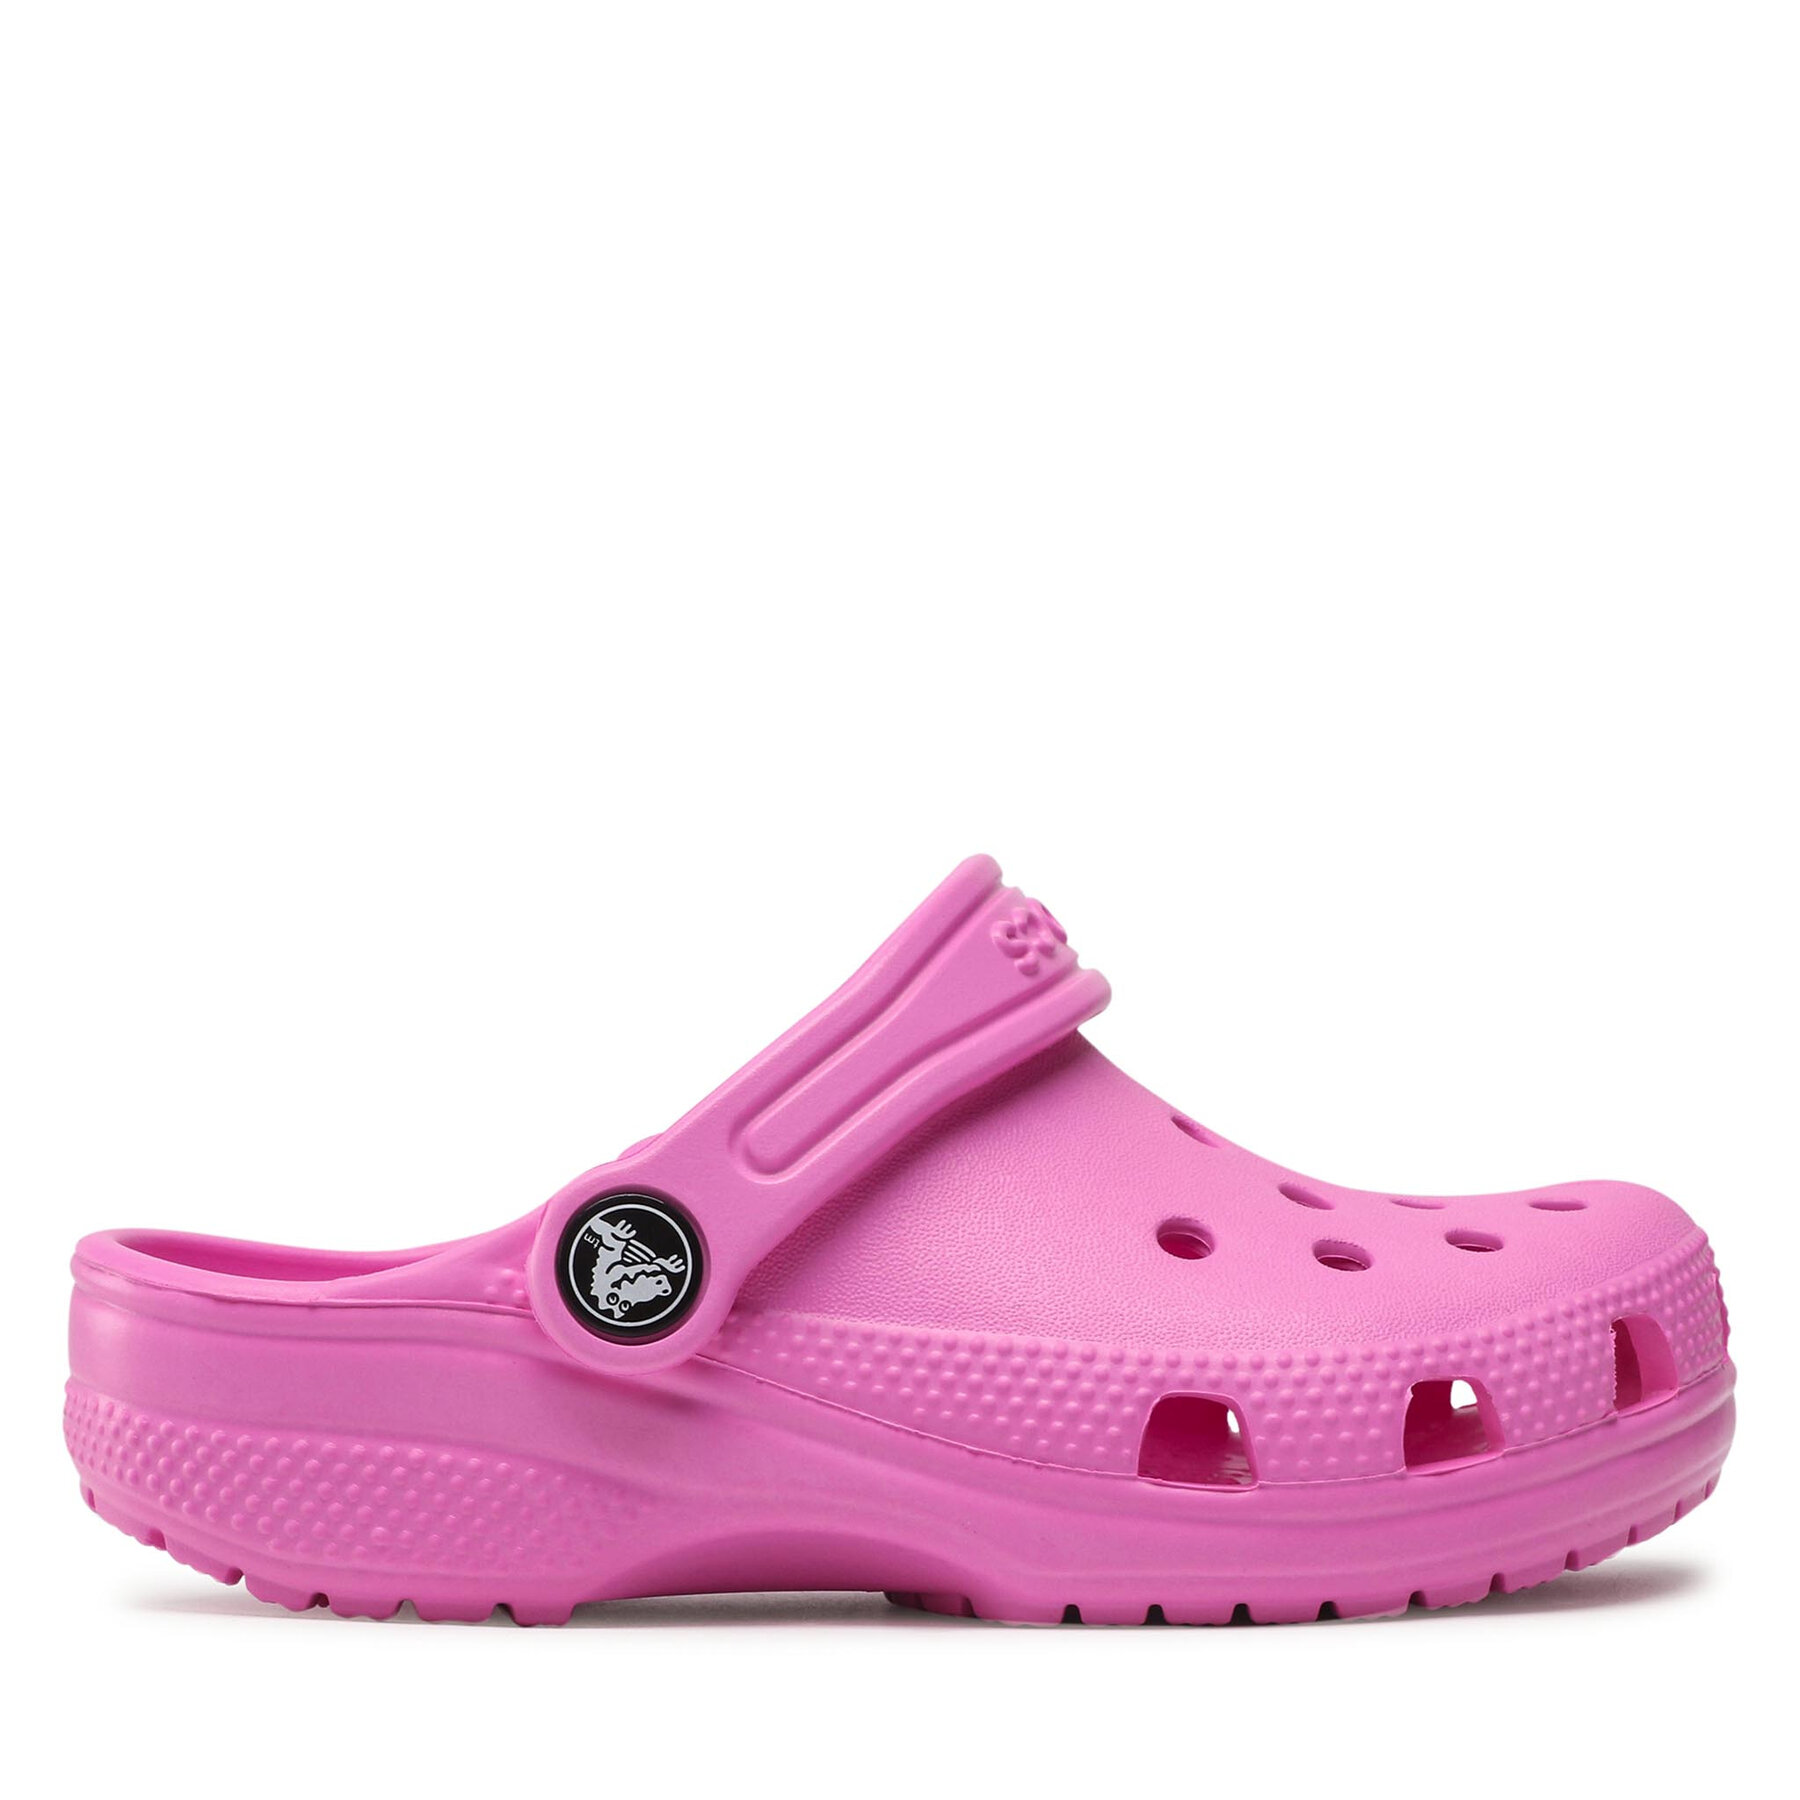 Pantoletten Crocs Classic Clog K 206991 Taffy Pink von Crocs